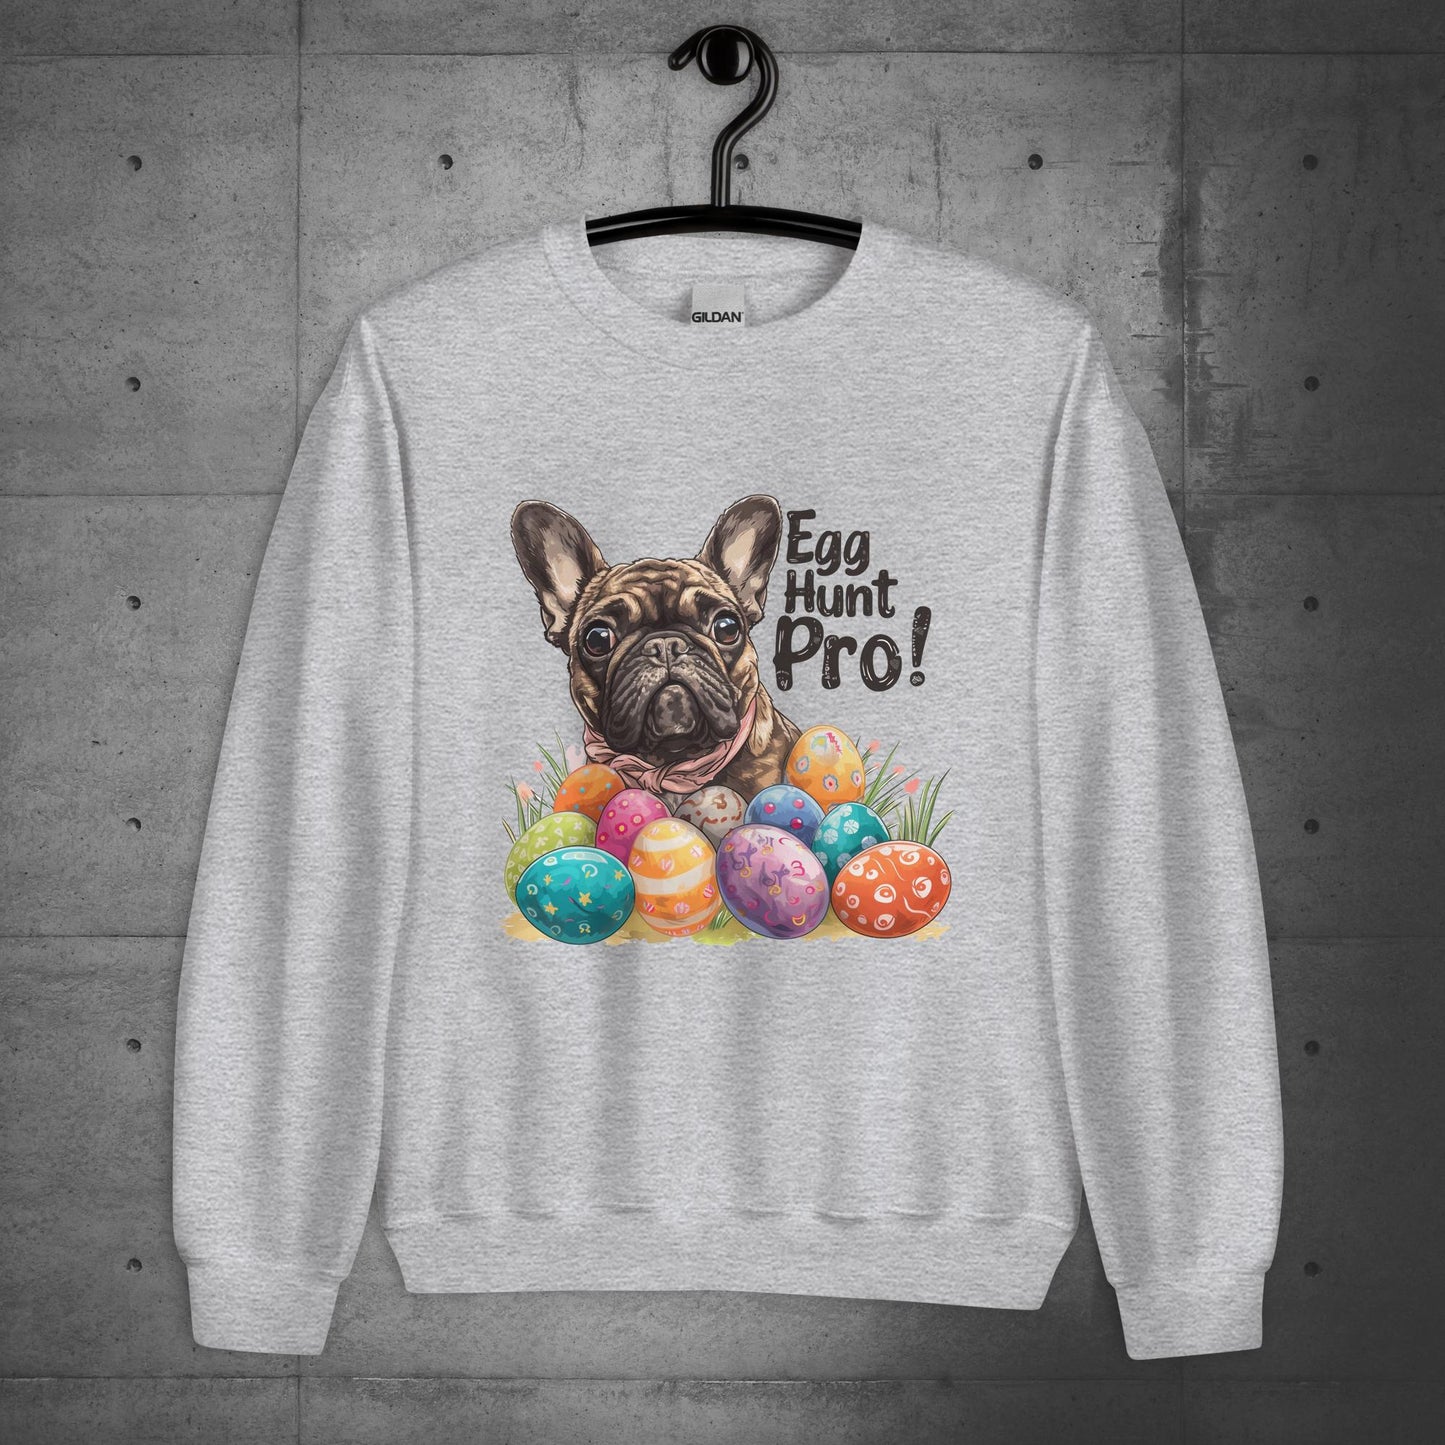 French Bulldog "Egg Hunt Pro !" - Unisex Sweatshirt